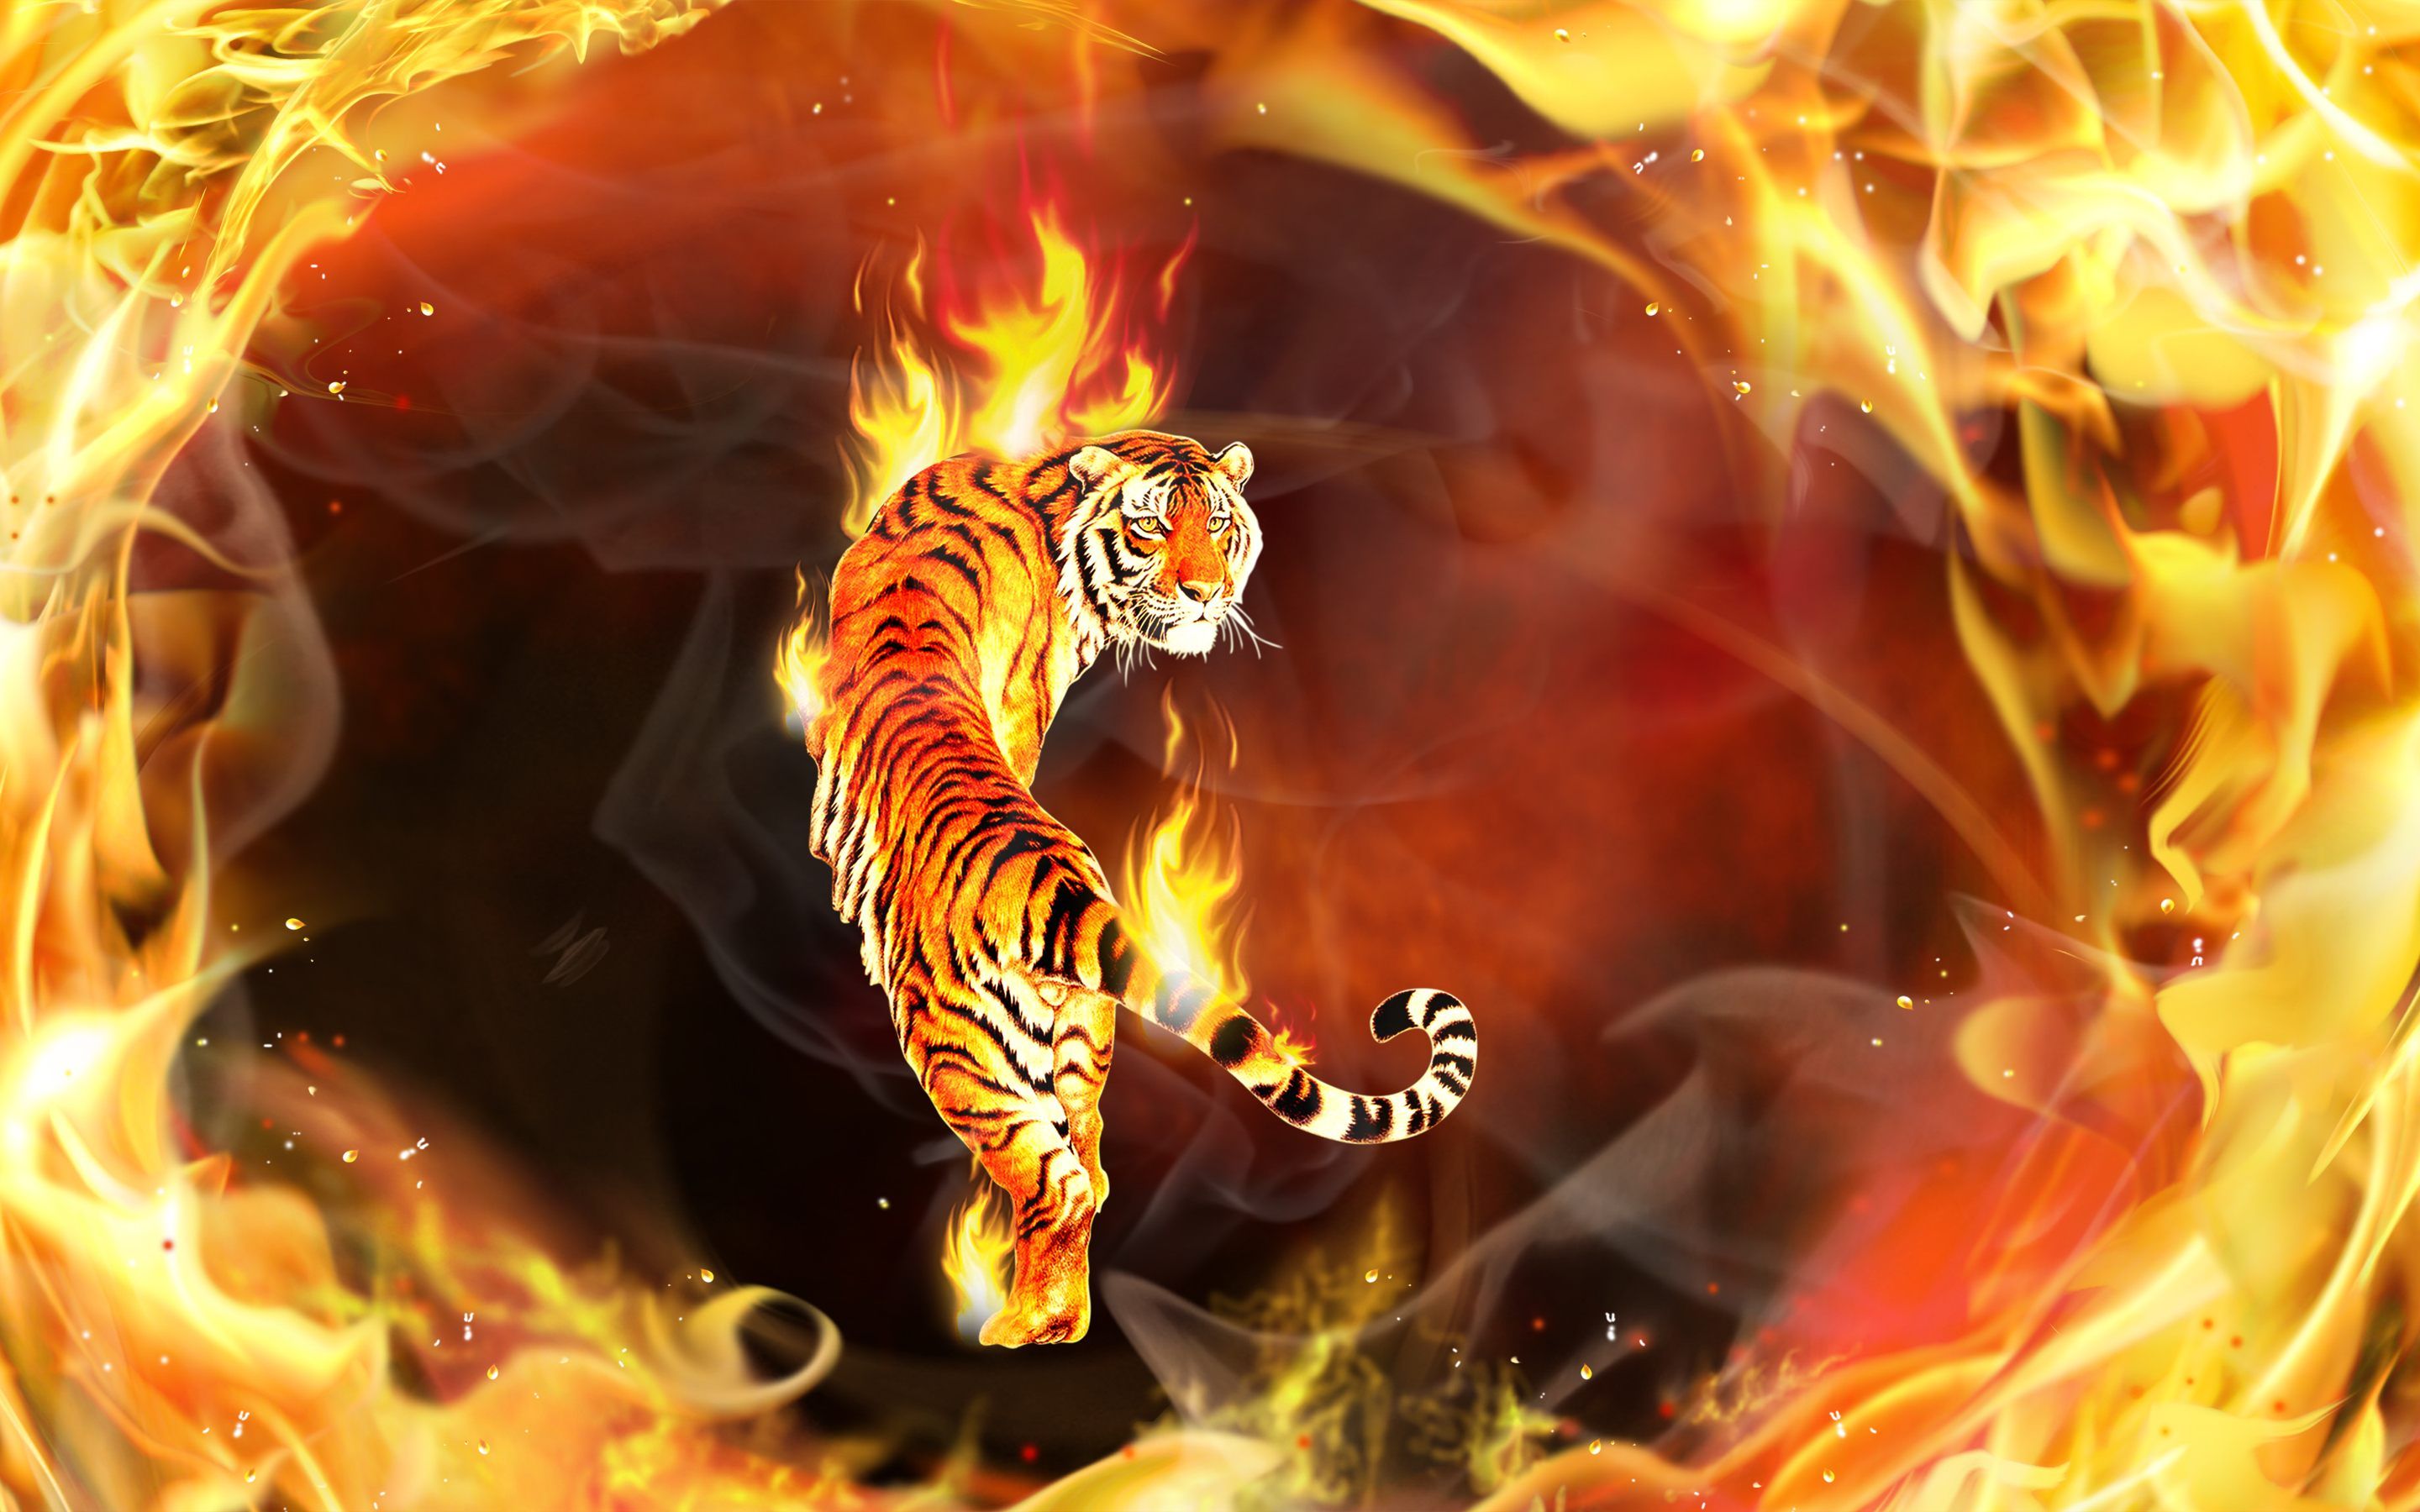 Fire Tiger Fantasy Animal Wallpaper HD Download For Desktop